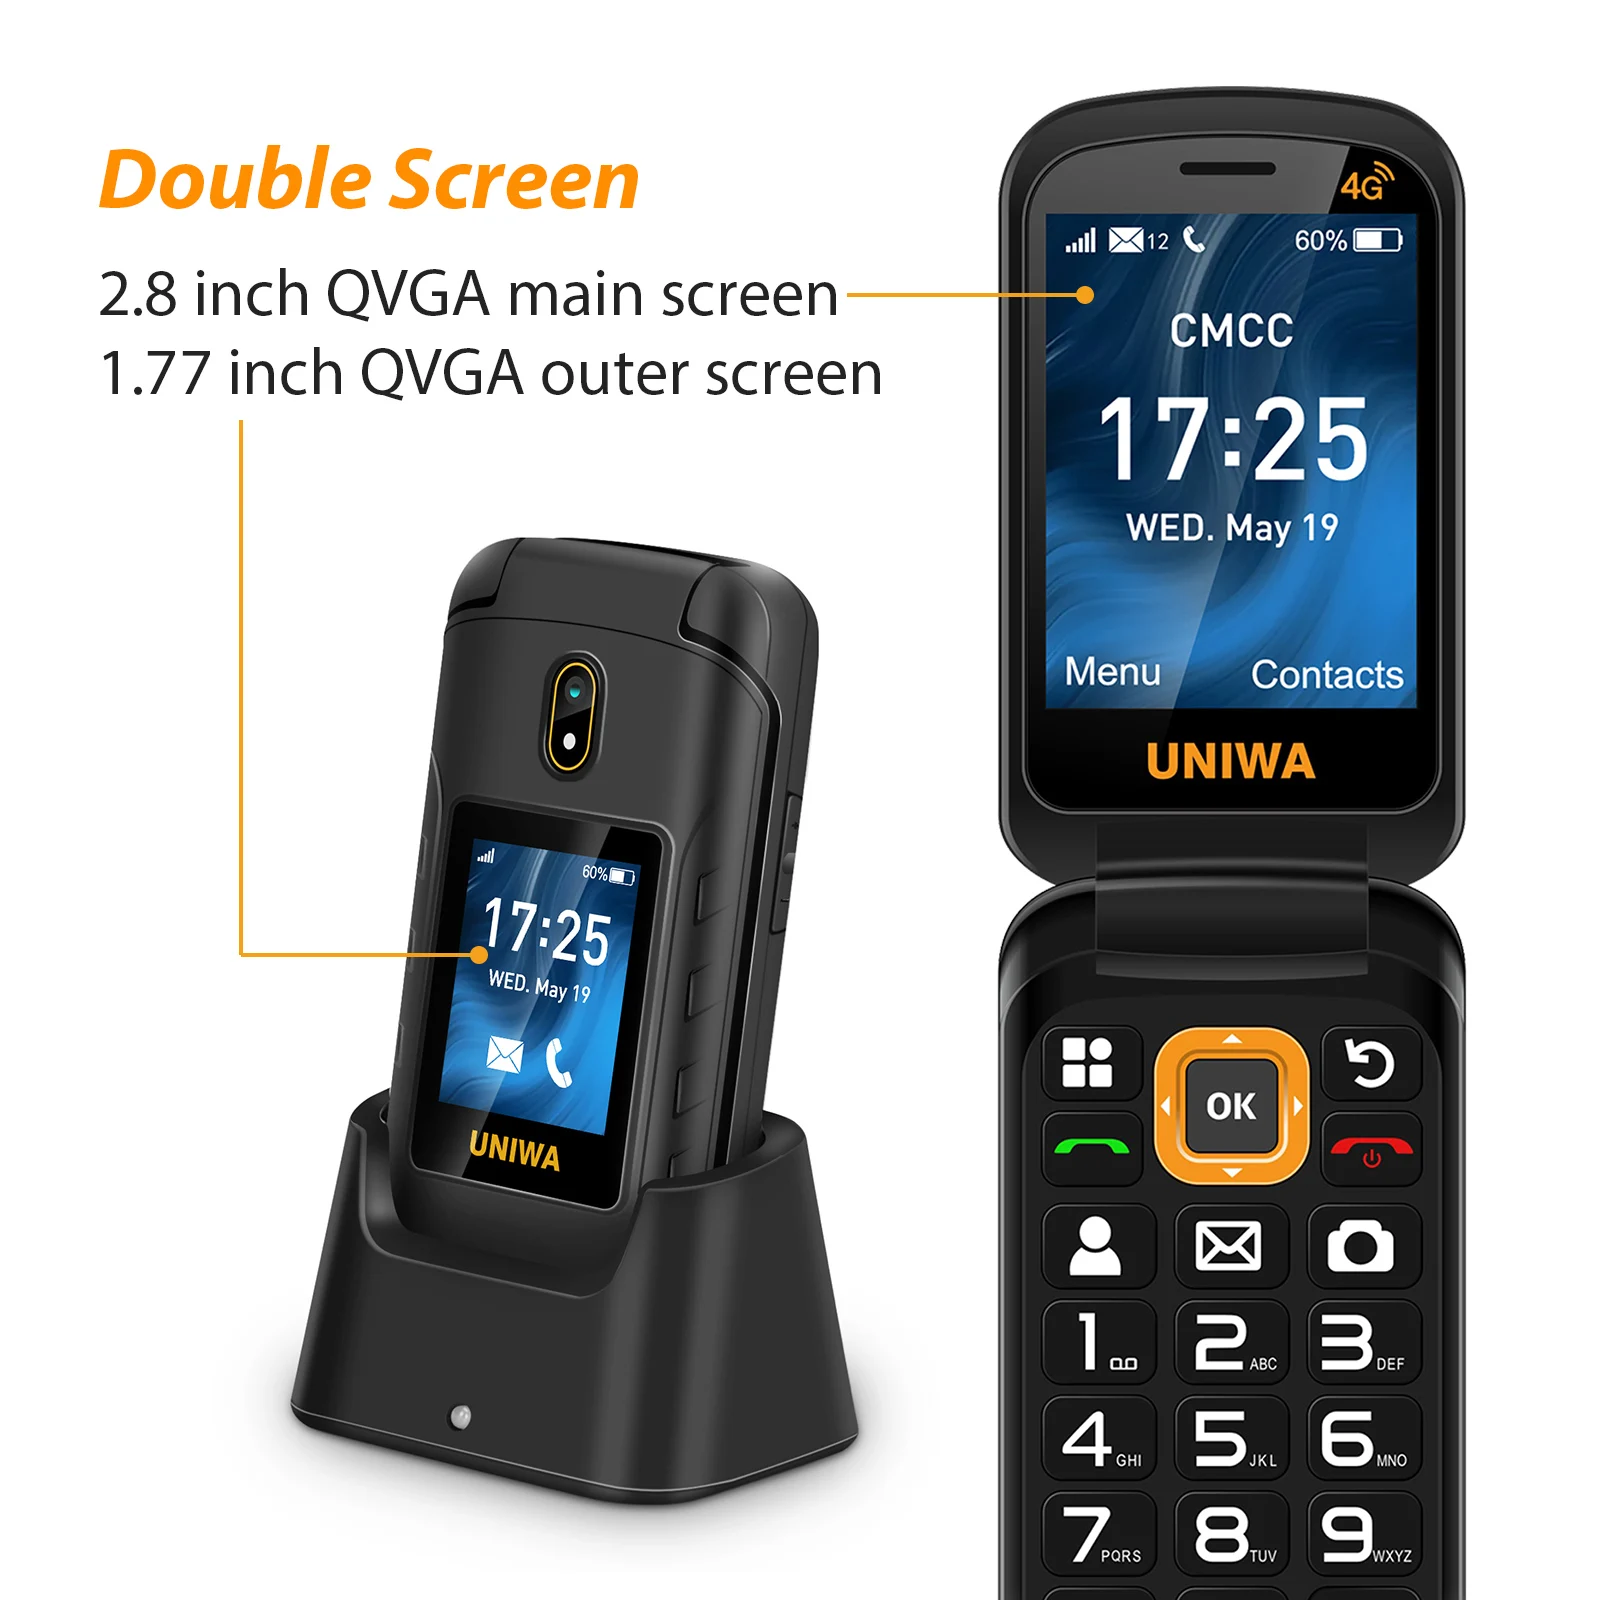 uniwa v909t 4g flip phone 2 8 inch double screen feature phone russian keyboard clamshell cellphone big push button 2250mah x28 free global shipping